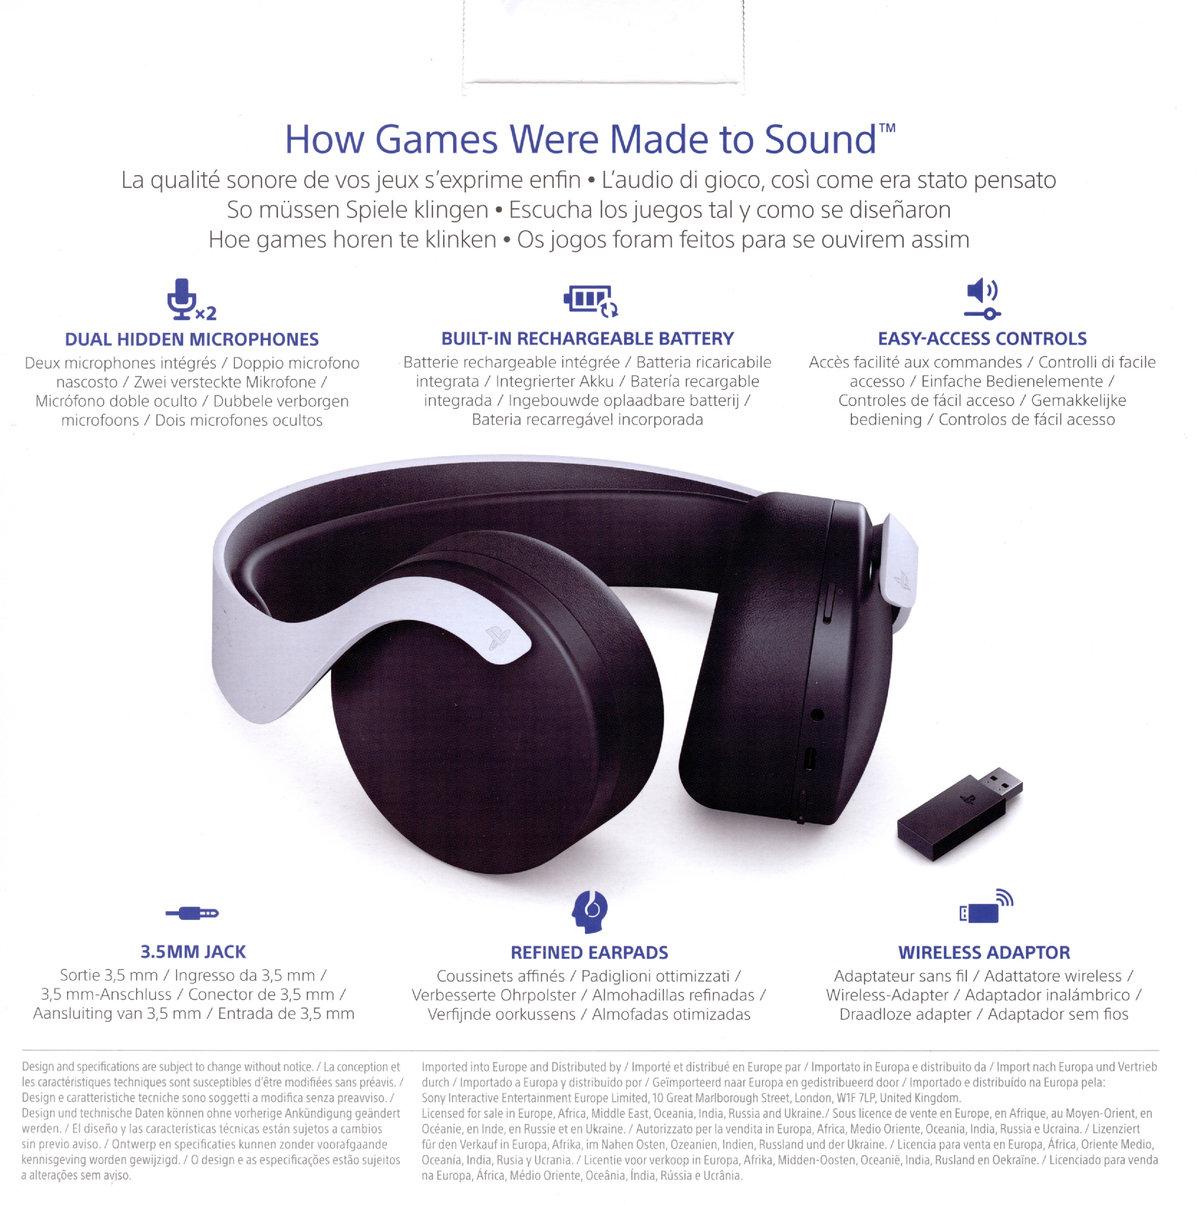 SONY PlayStation 5 PULSE 3D Wireless Headset (Weiss)